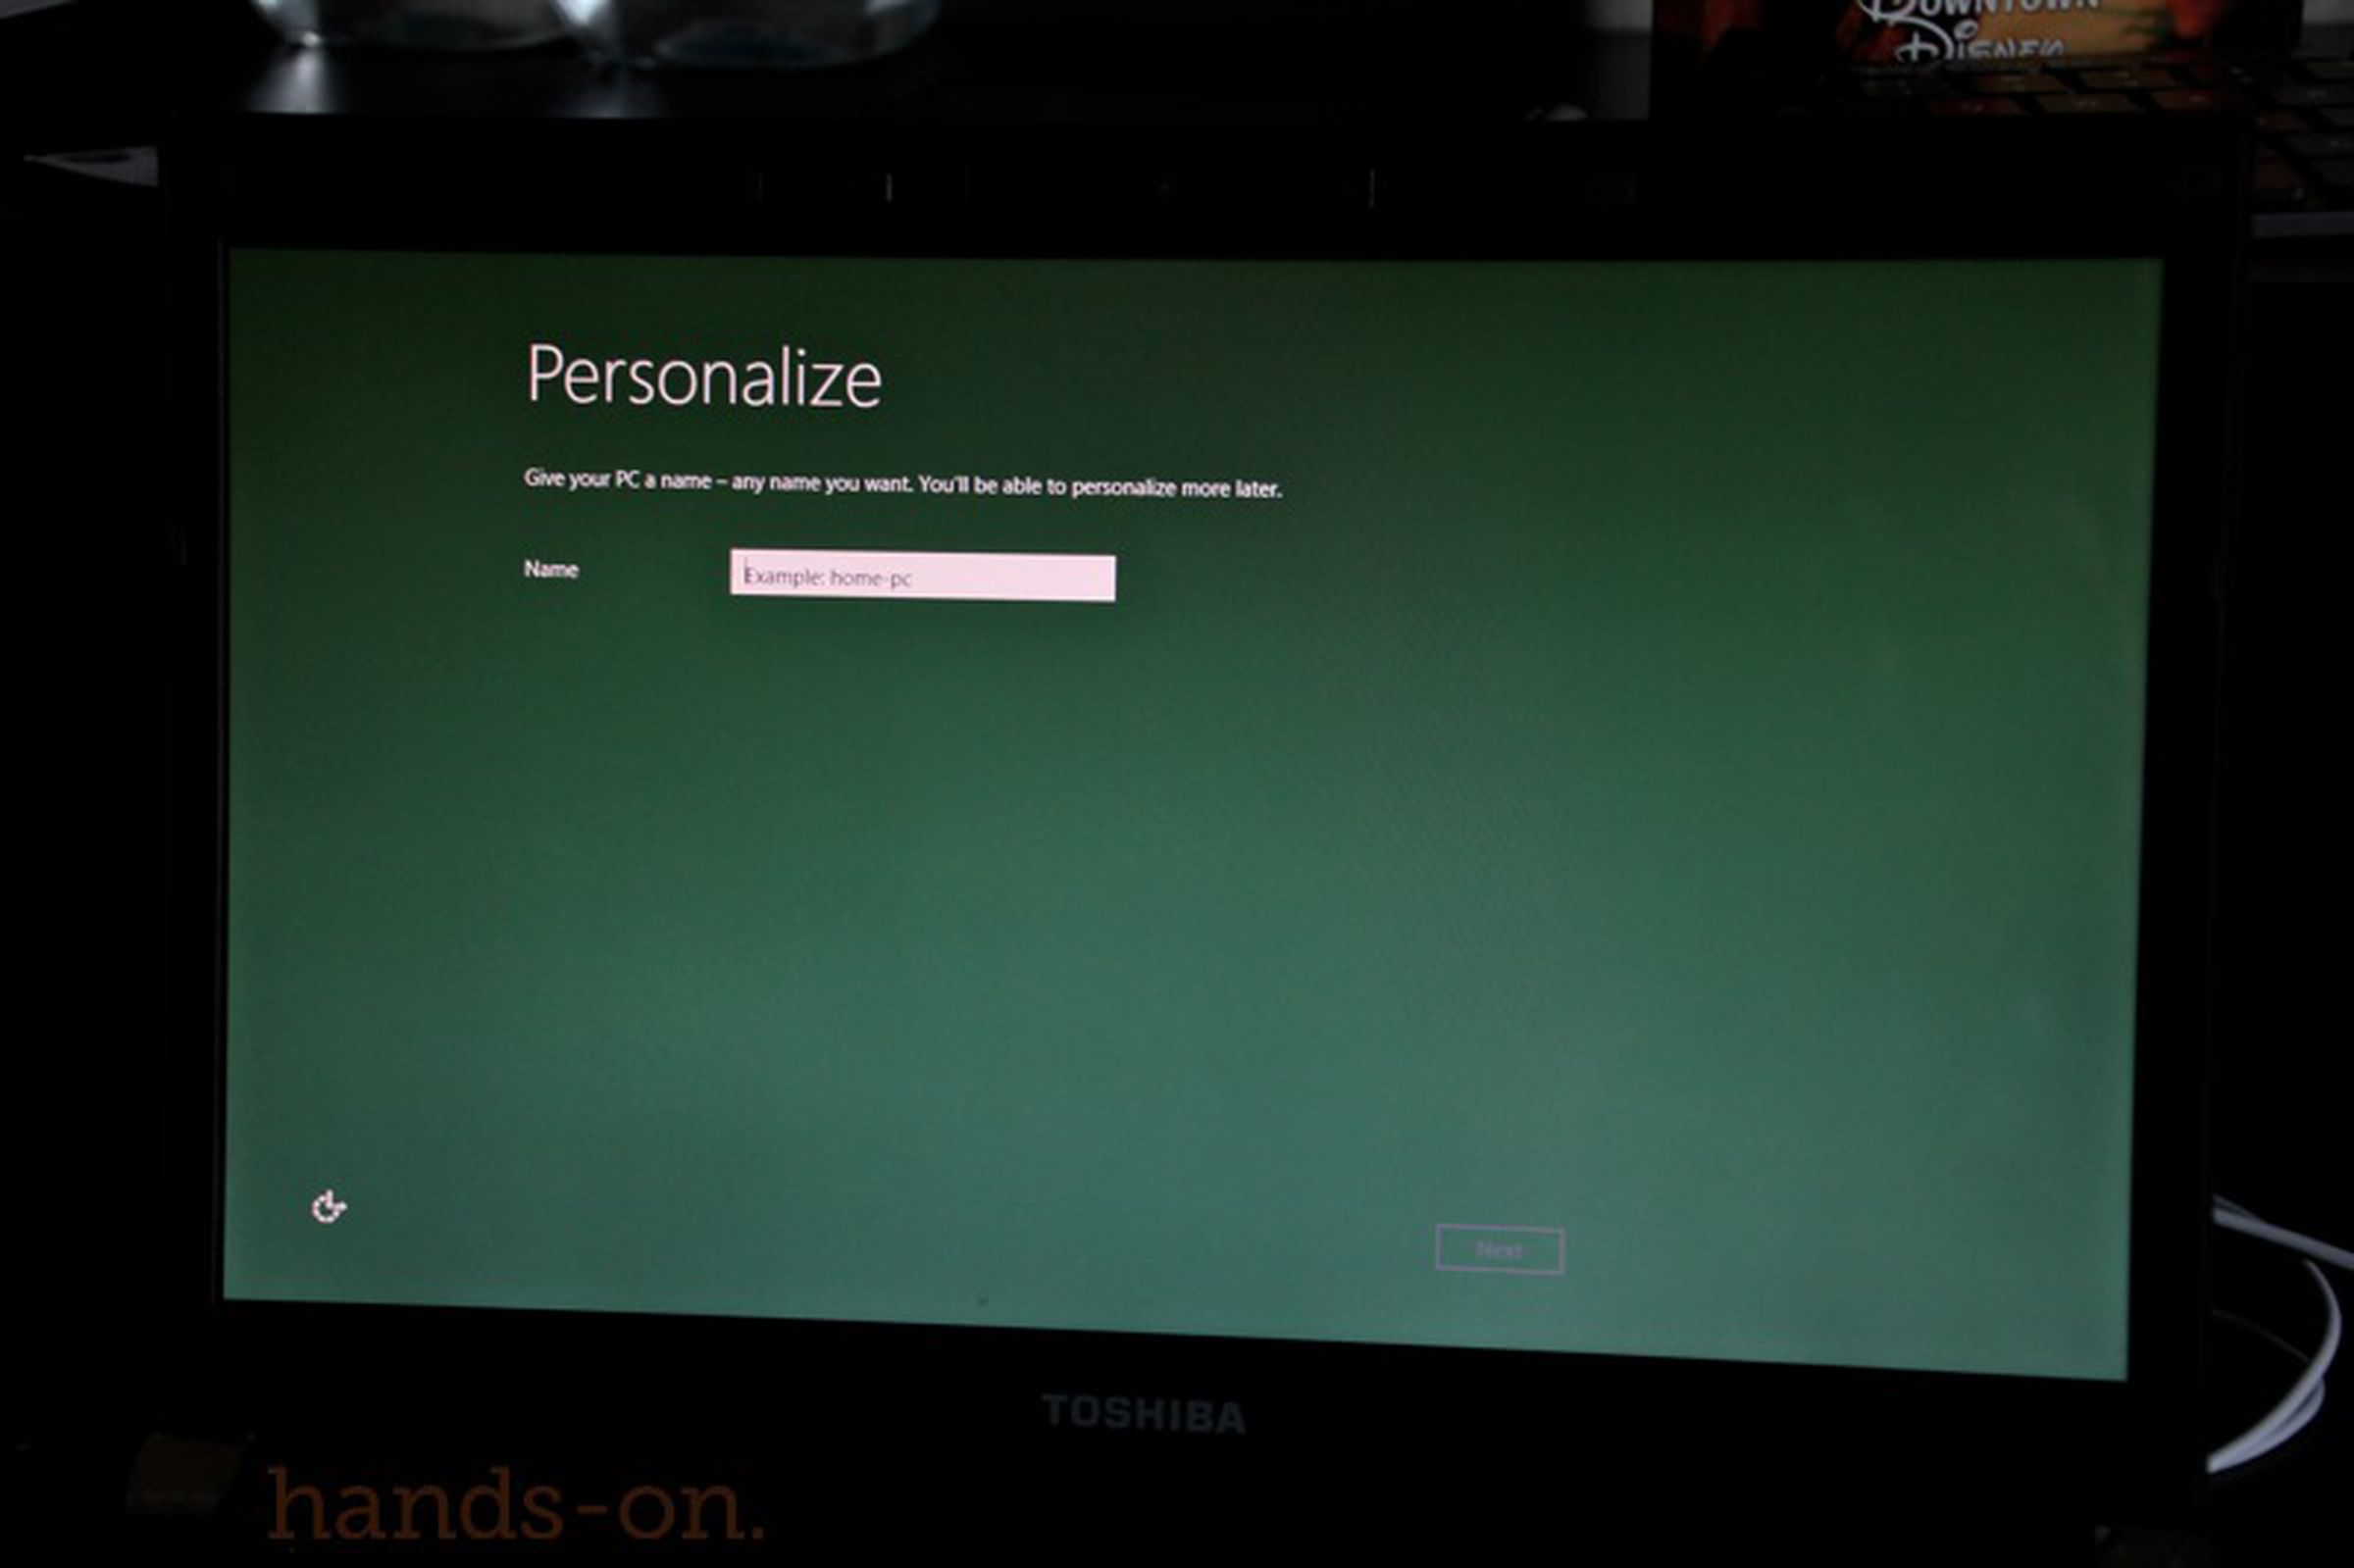 Windows 8 on a laptop hands-on photos